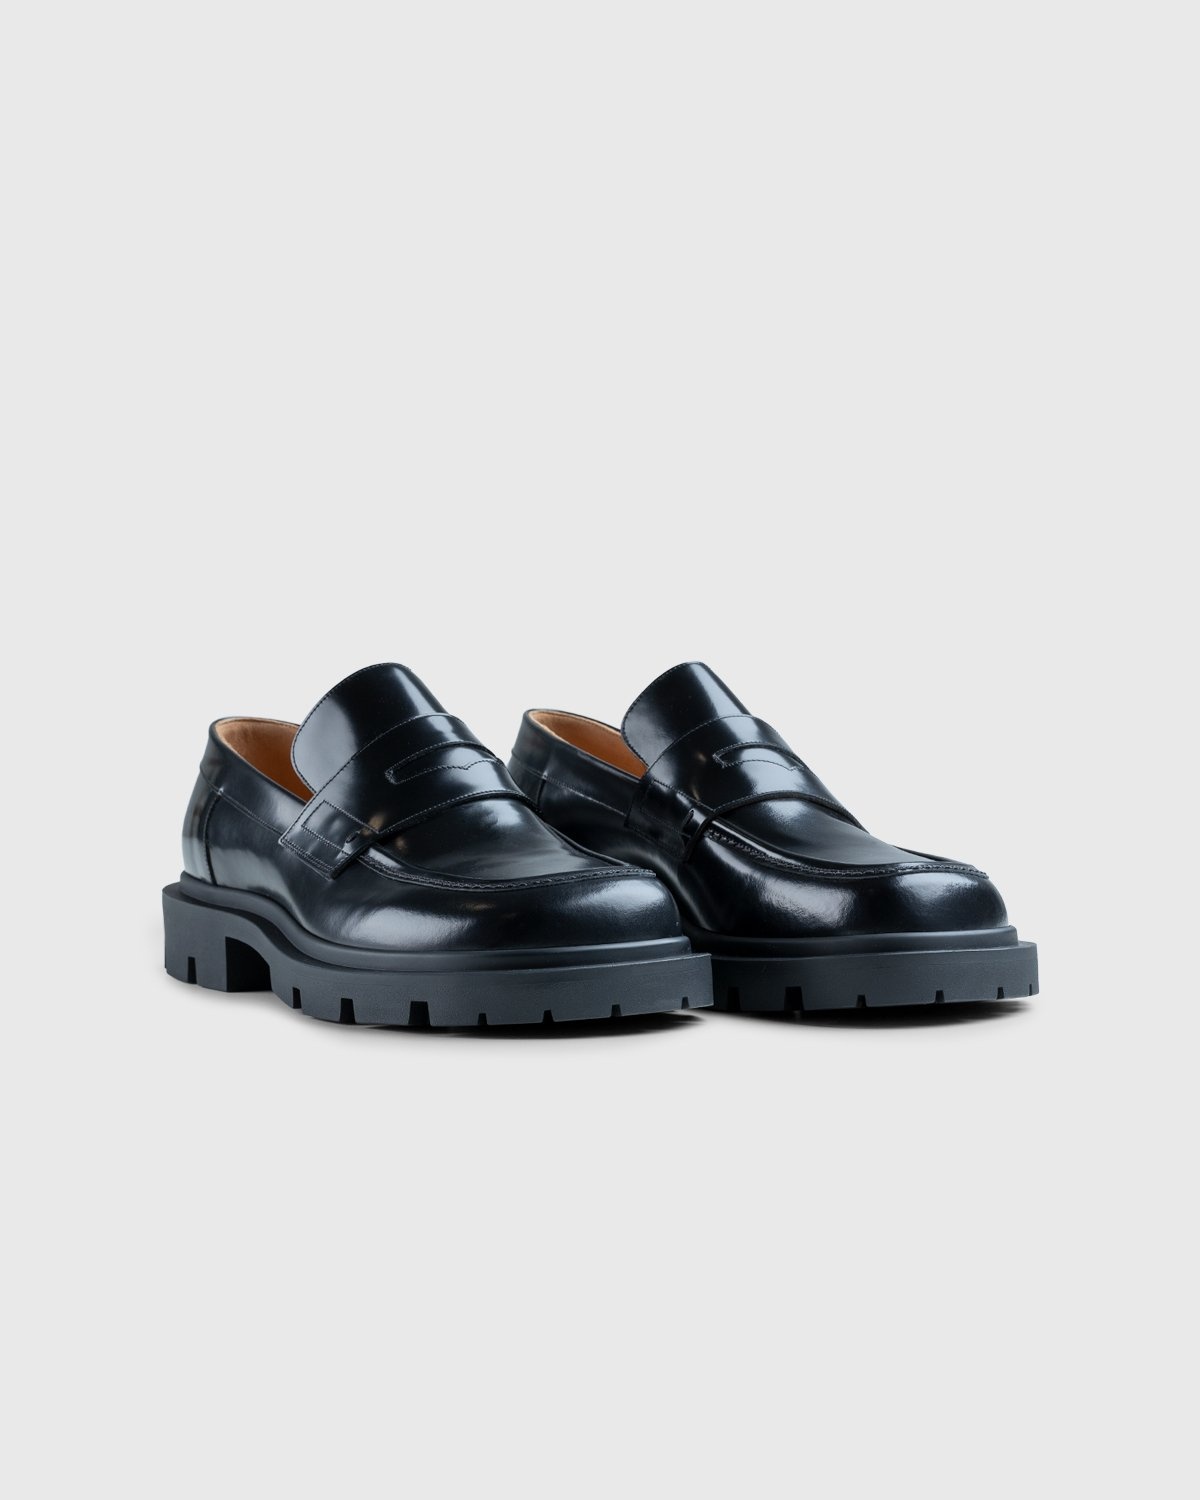 Maison Margiela – Leather Loafers Black - Loafers - Black - Image 2